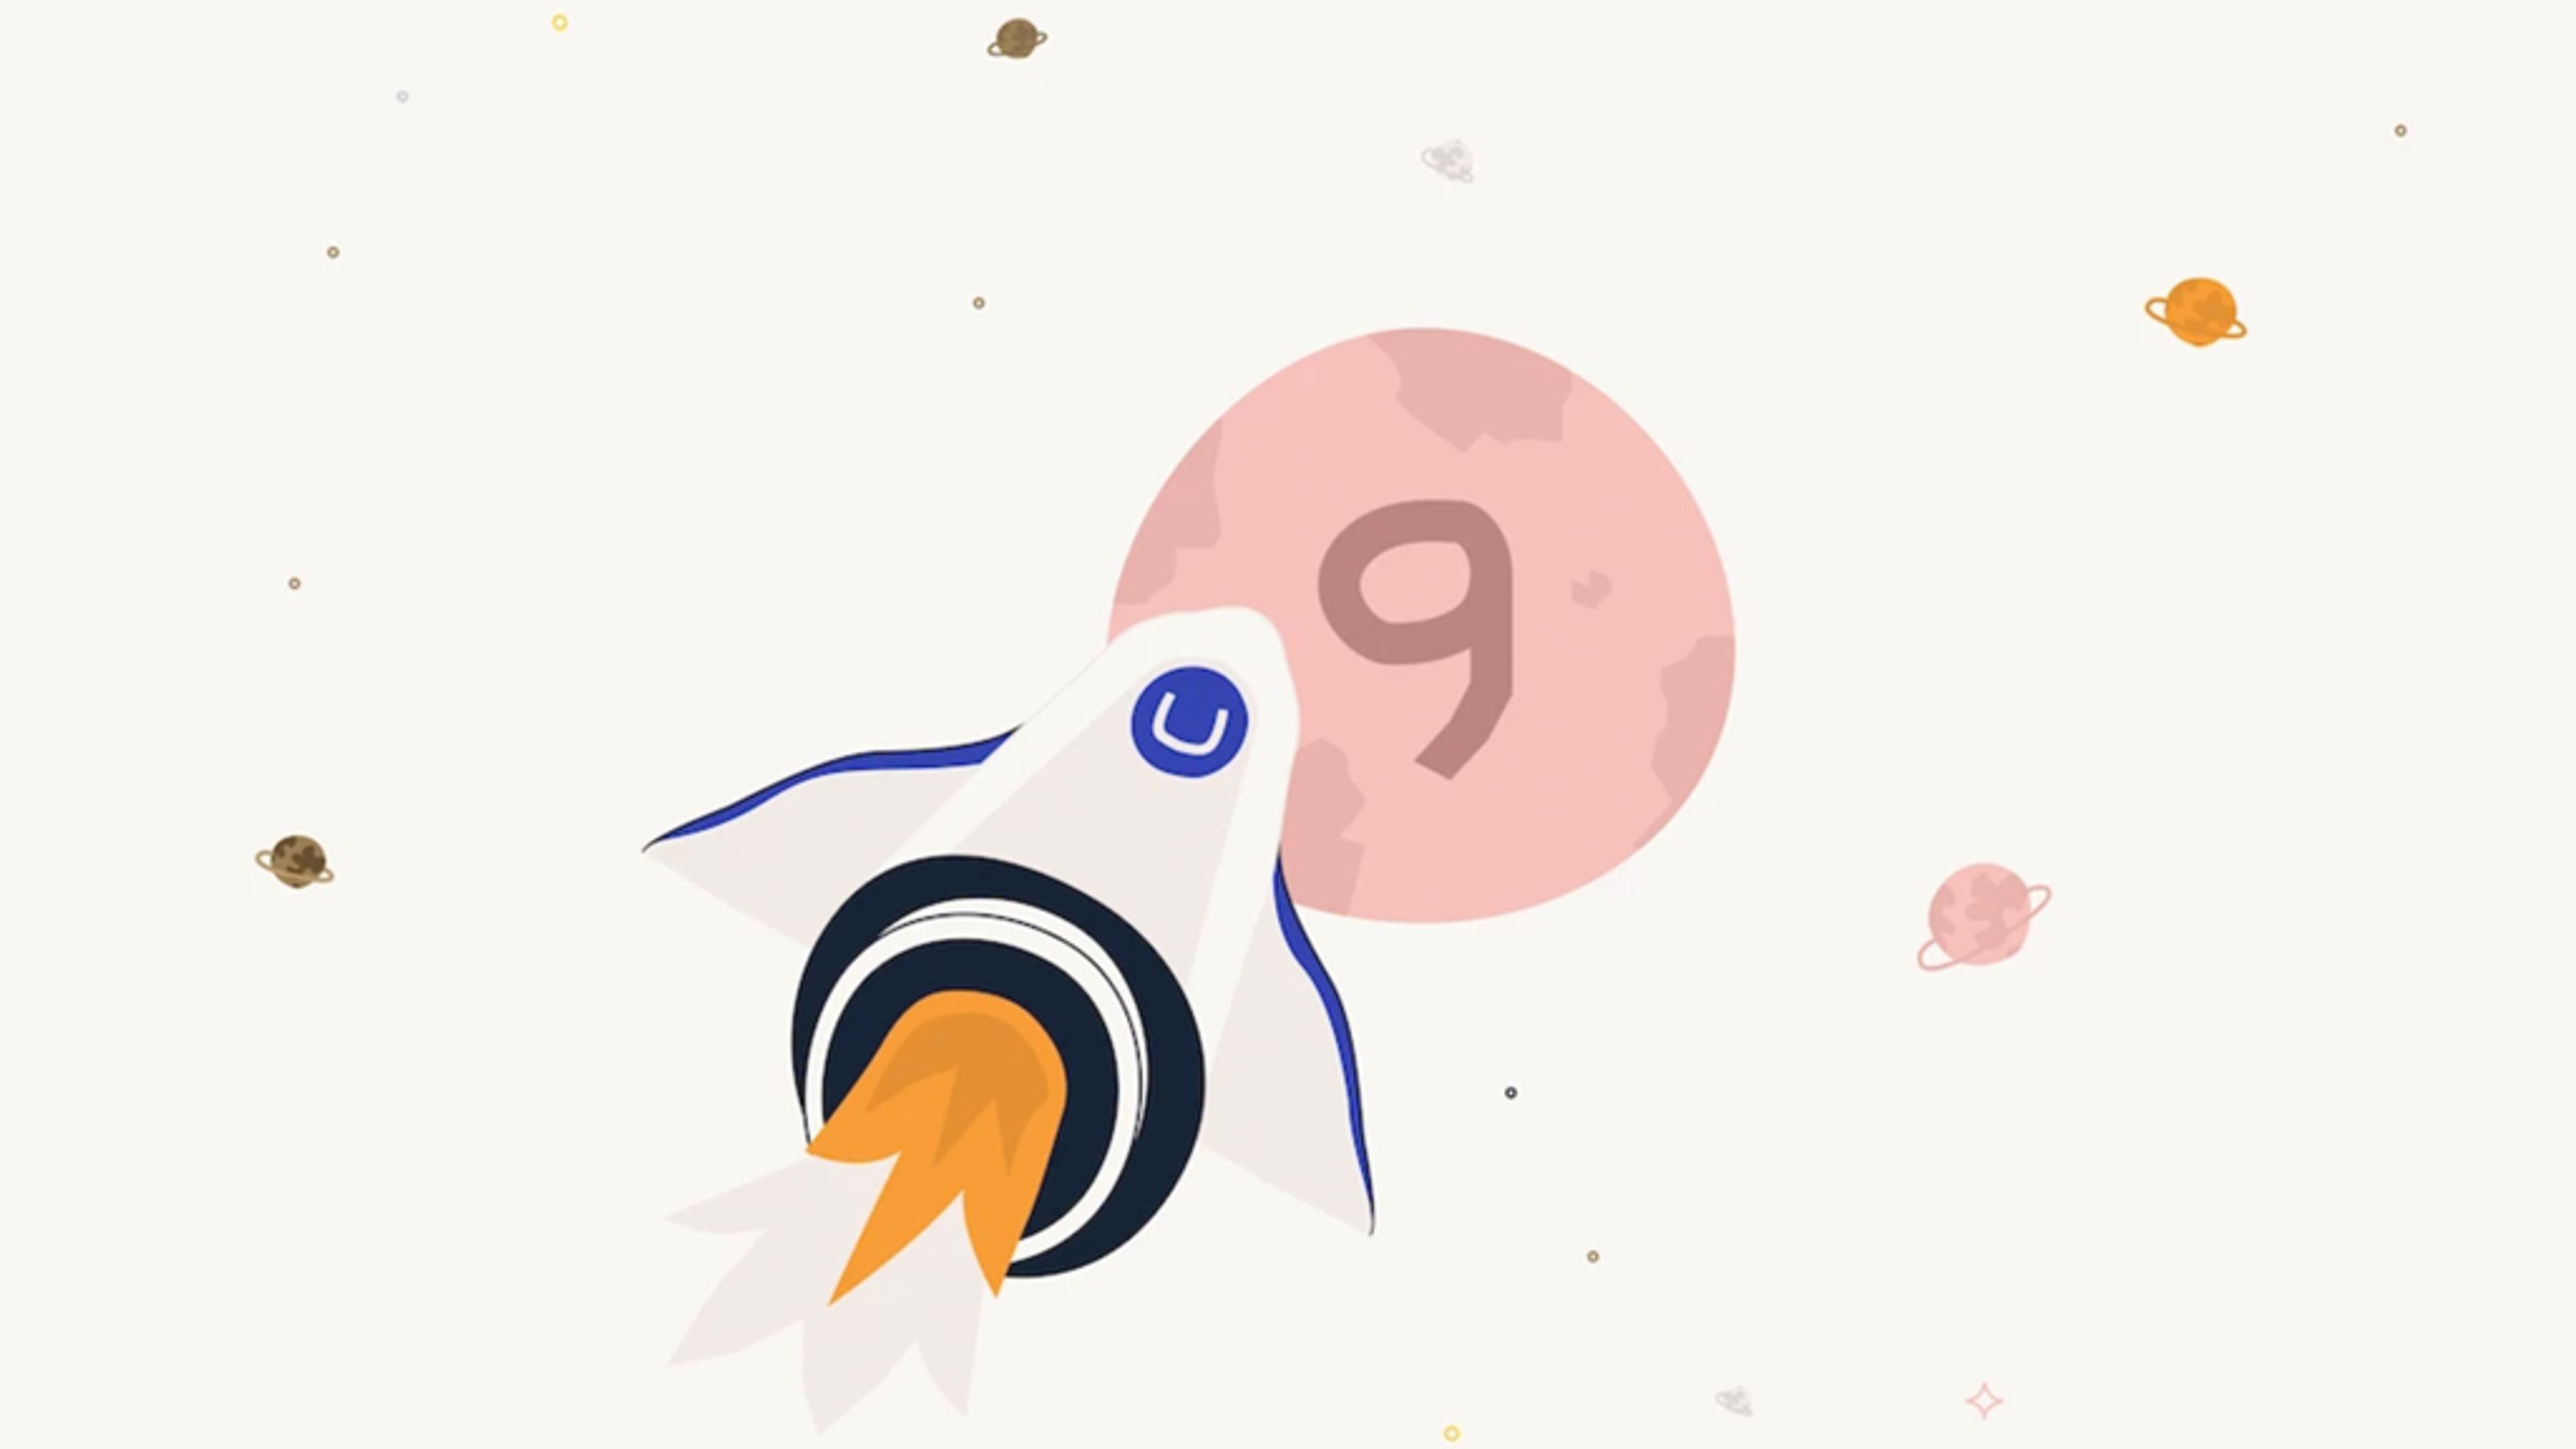 Image of Umbraco 9 logo in space illustration